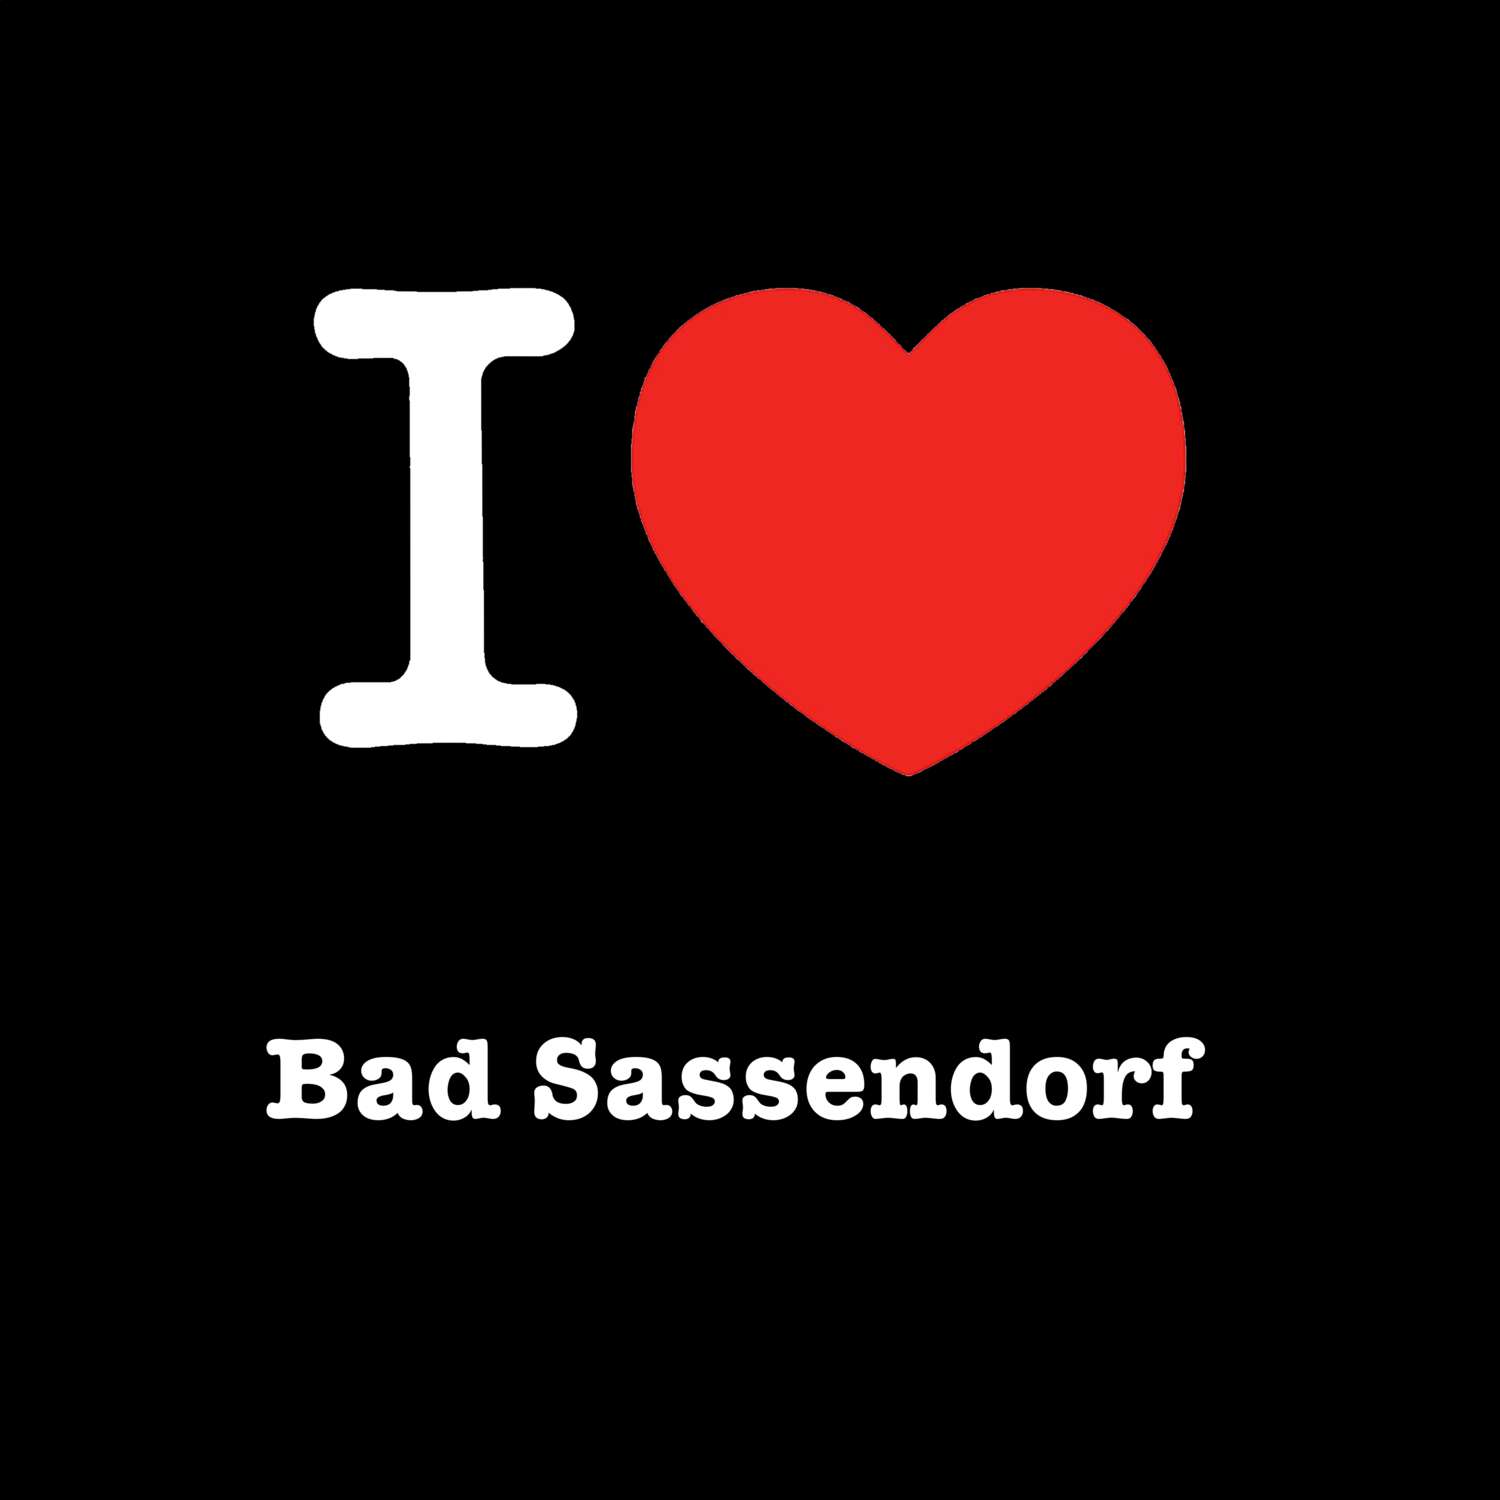 Bad Sassendorf T-Shirt »I love«